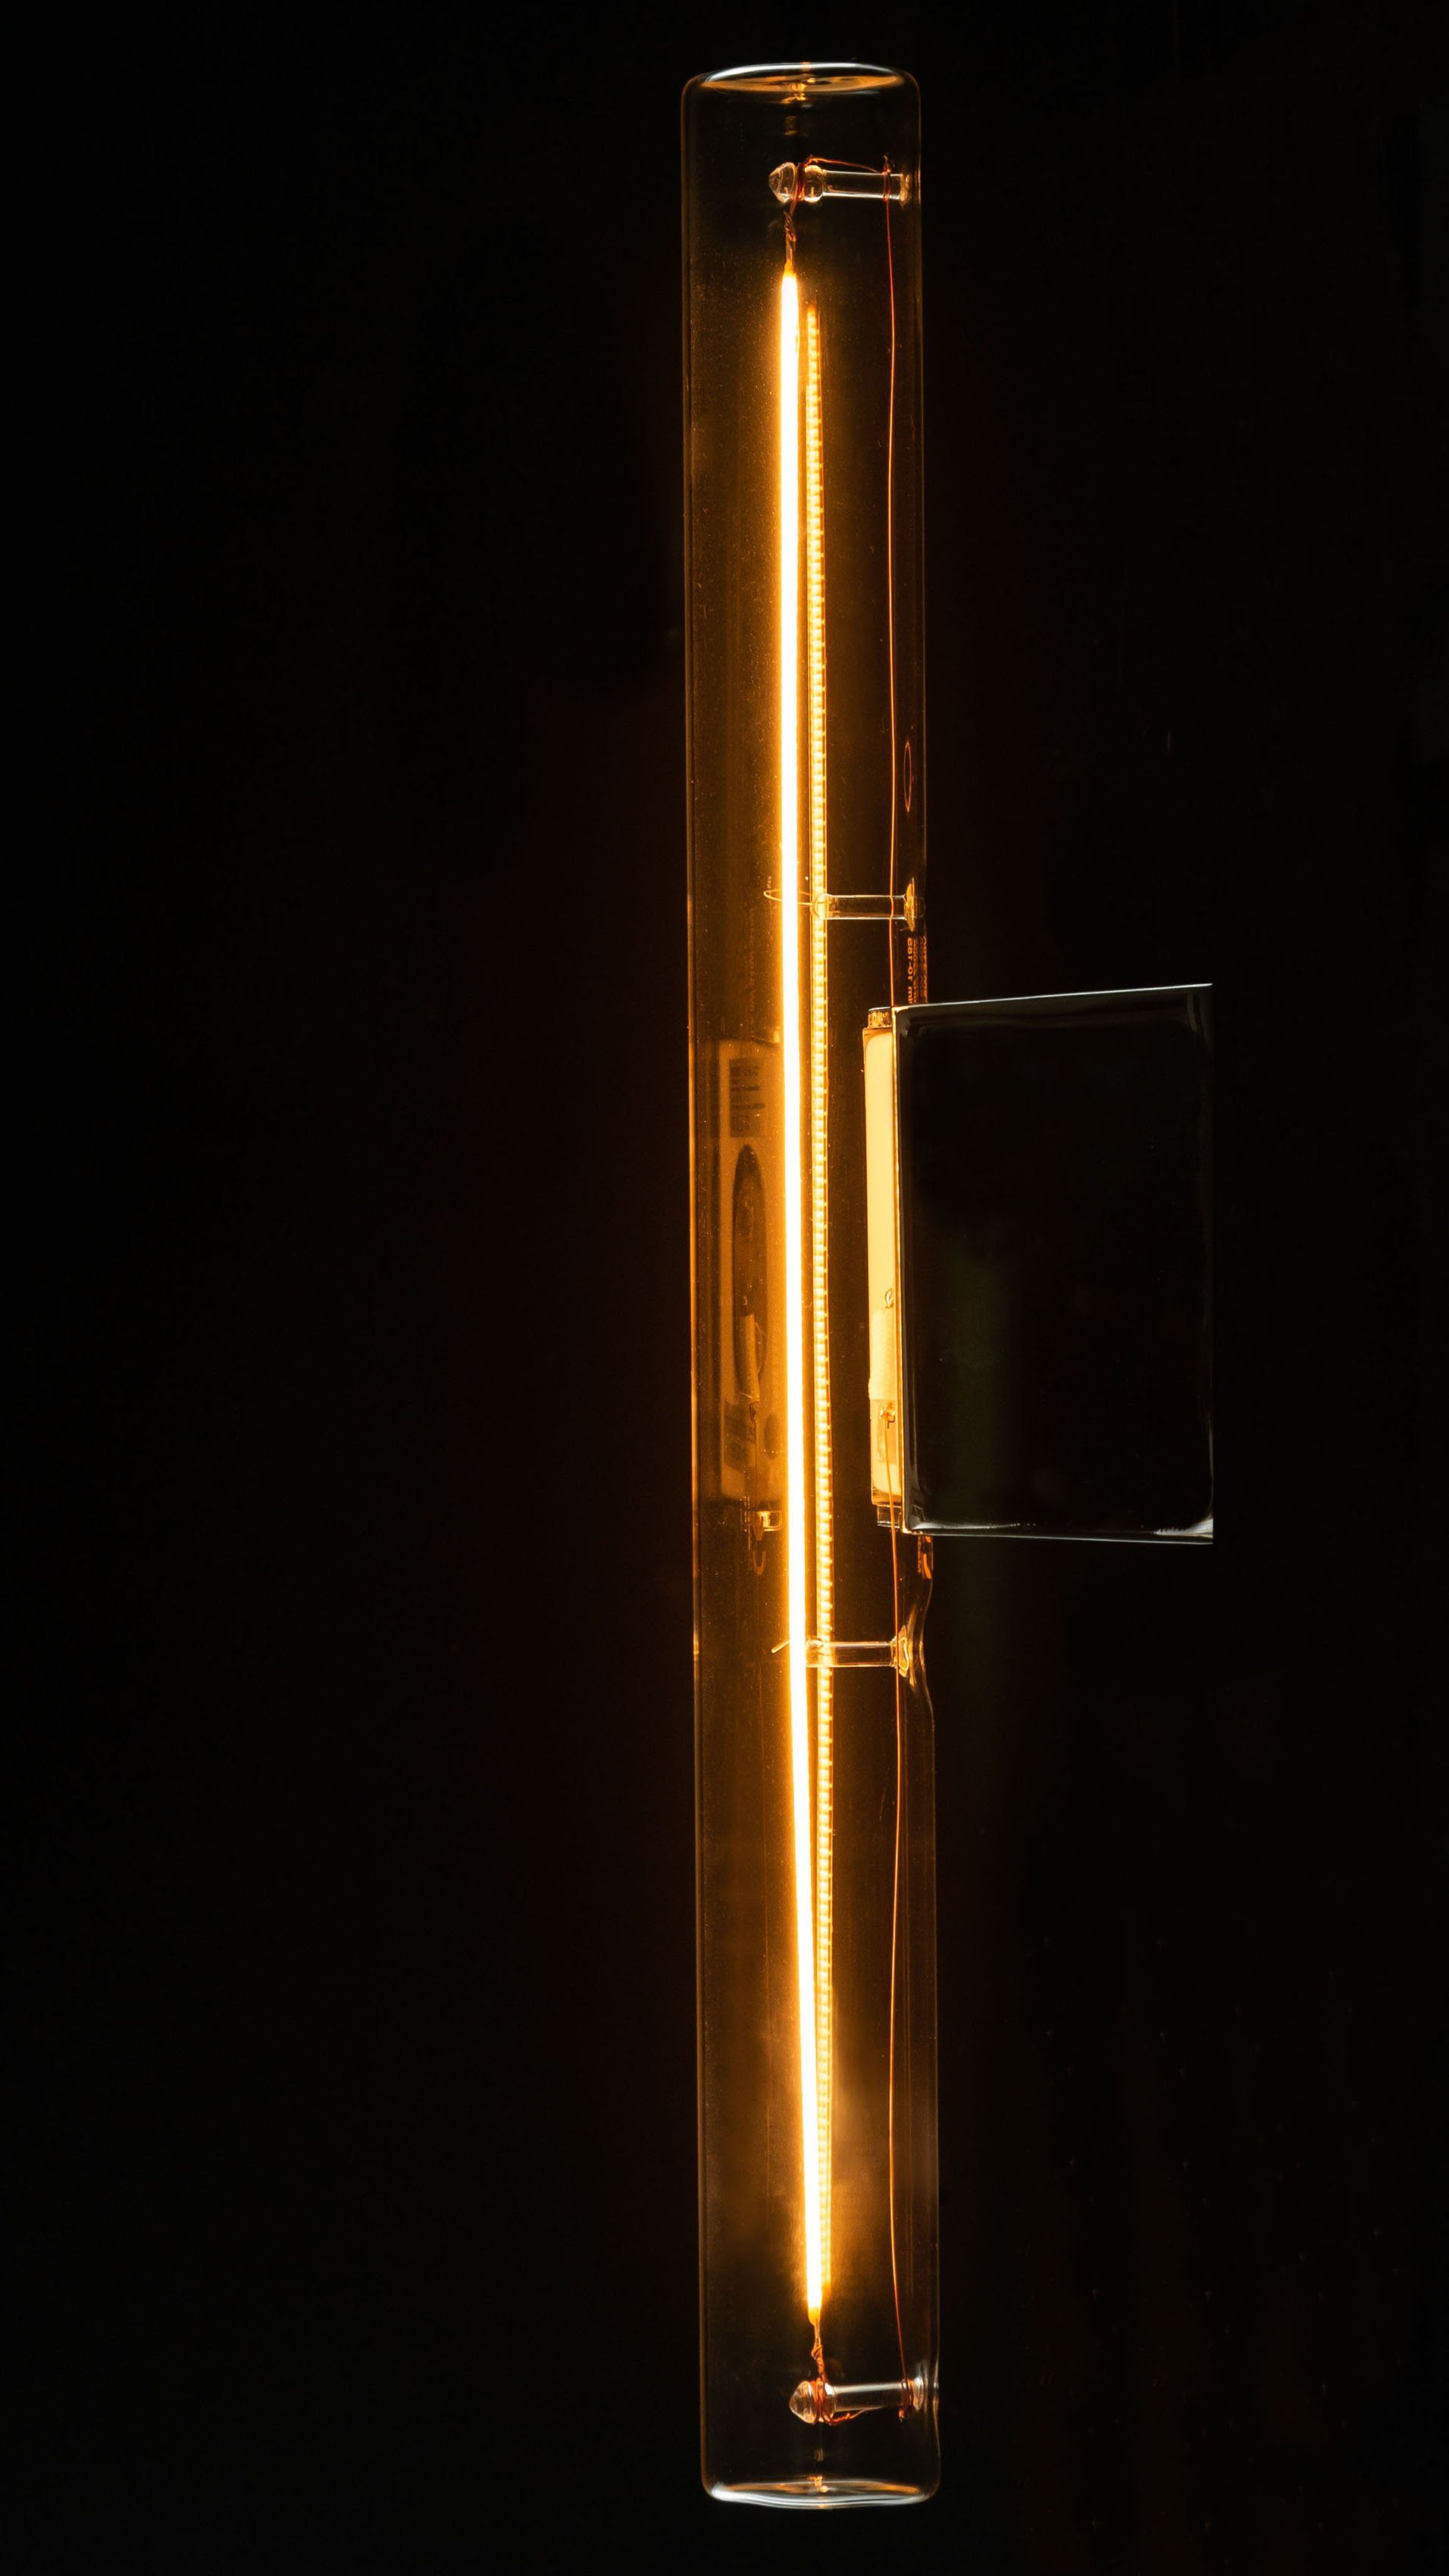 S14d 2700K Linienlampe Linear, 1 St., klar, S14d, LED-Leuchtmittel SEGULA Warmweiß, 300mm